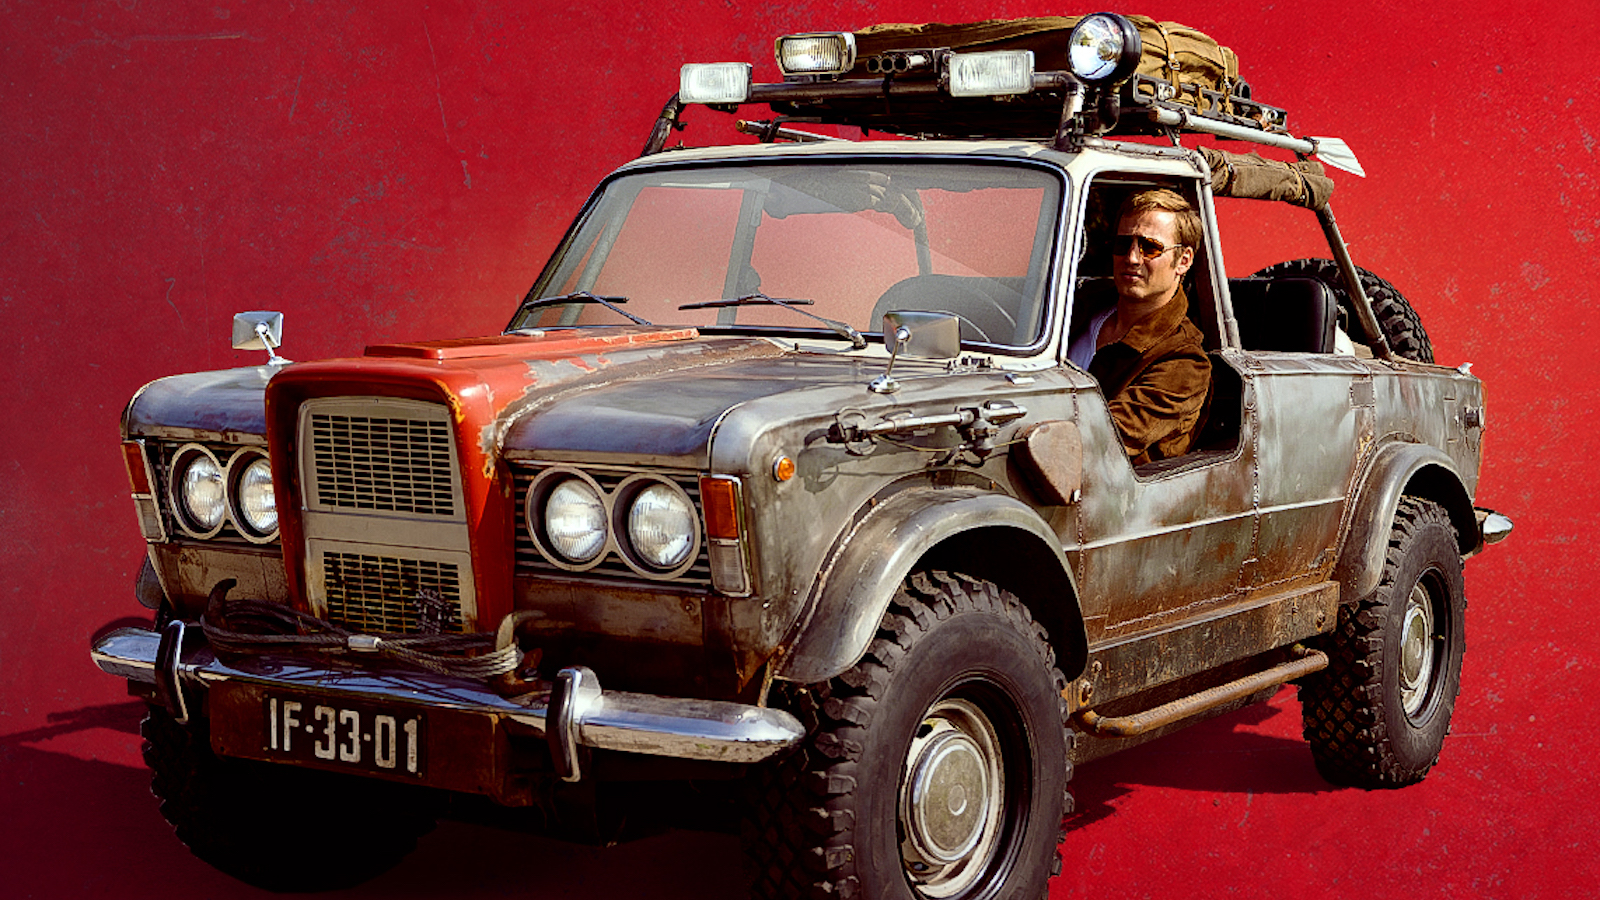 Mister Car e i templari, la recensione: su Netflix l'Indiana Jones polacco?